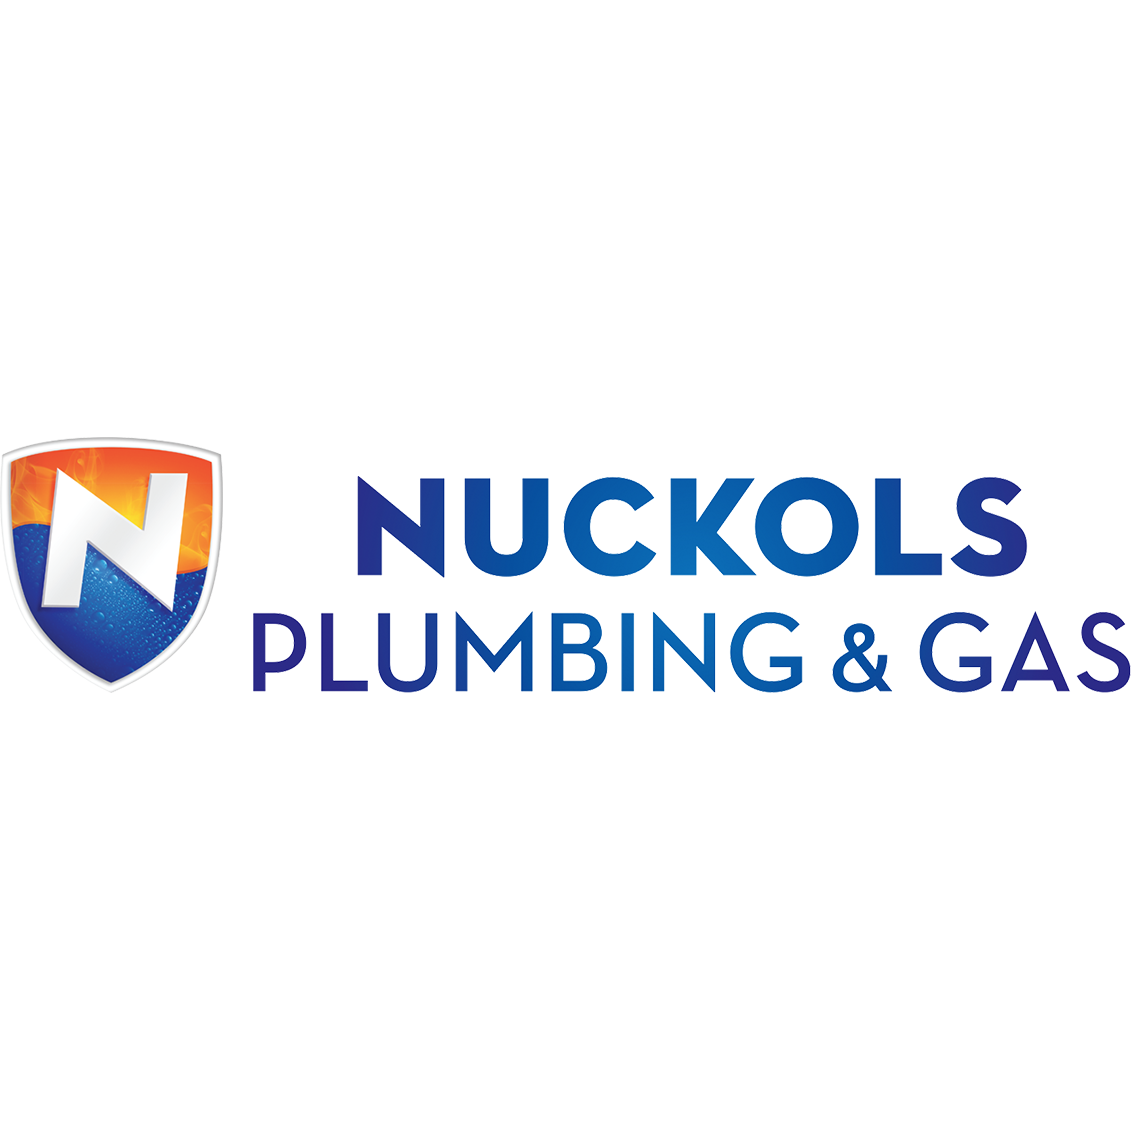 Nuckols Plumbing & Gas, LLC Logo